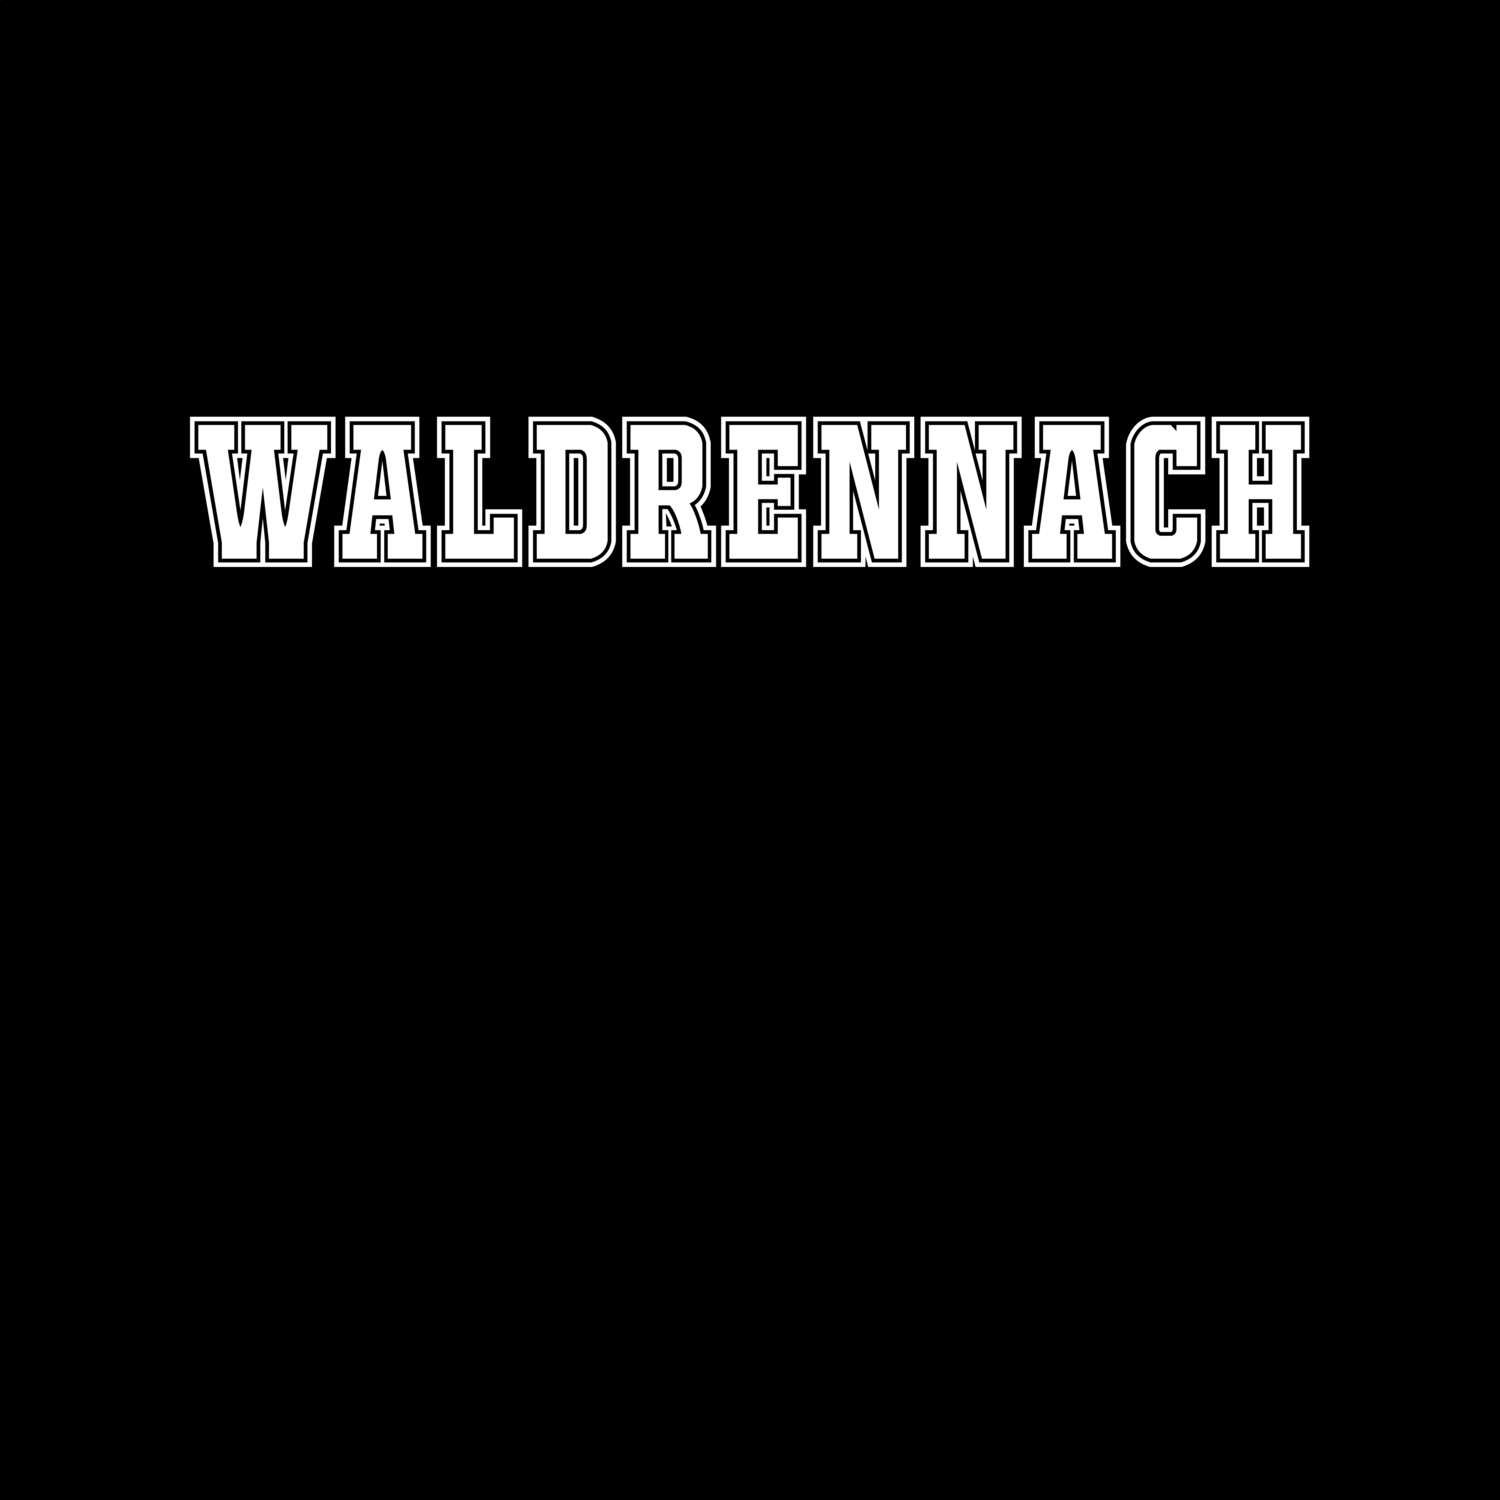 Waldrennach T-Shirt »Classic«